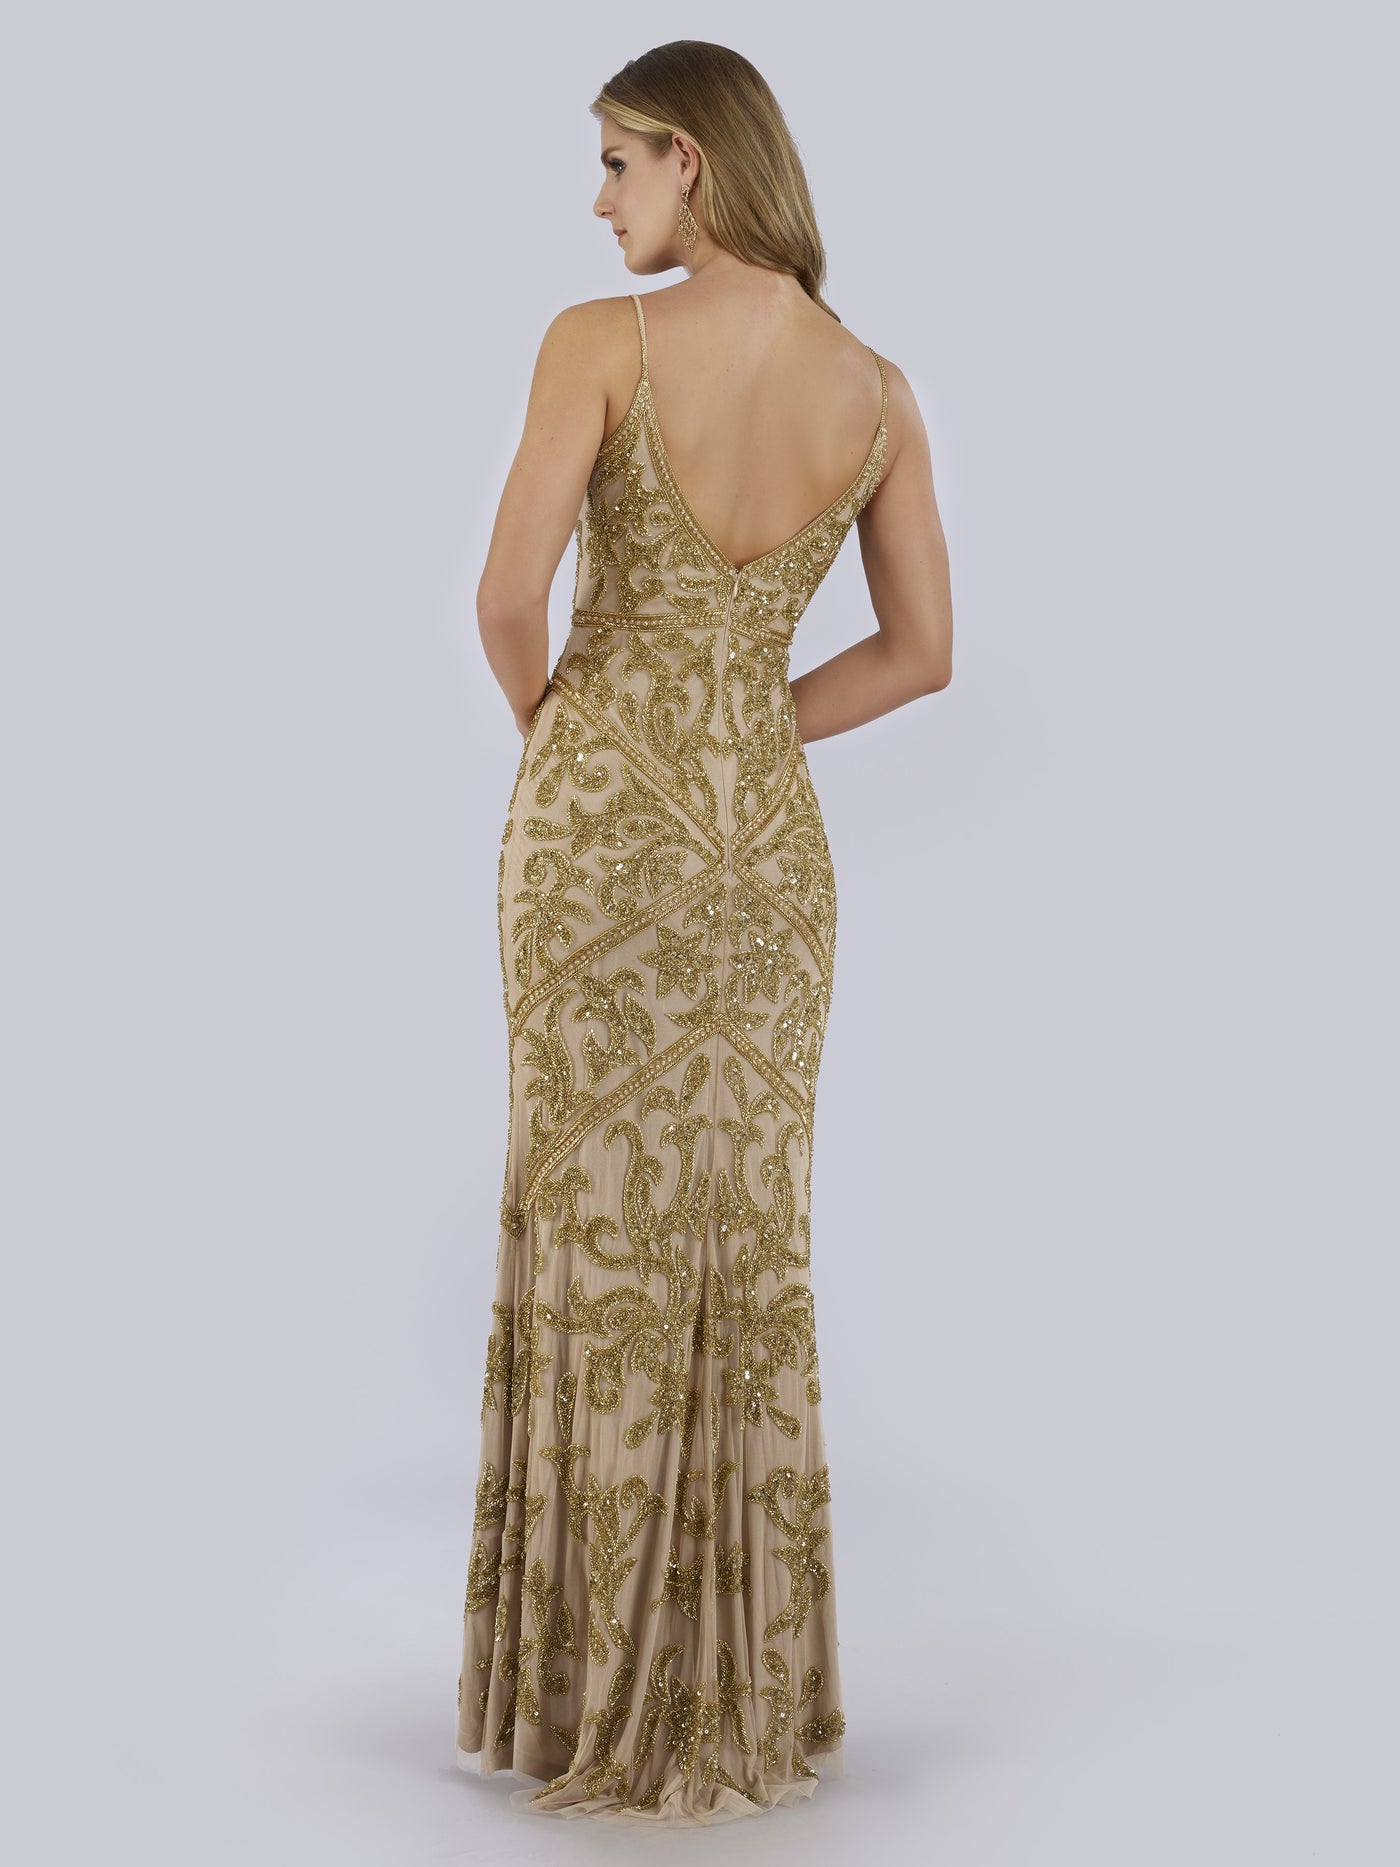 Lara 29744 - Spaghetti Strap Beaded Dress